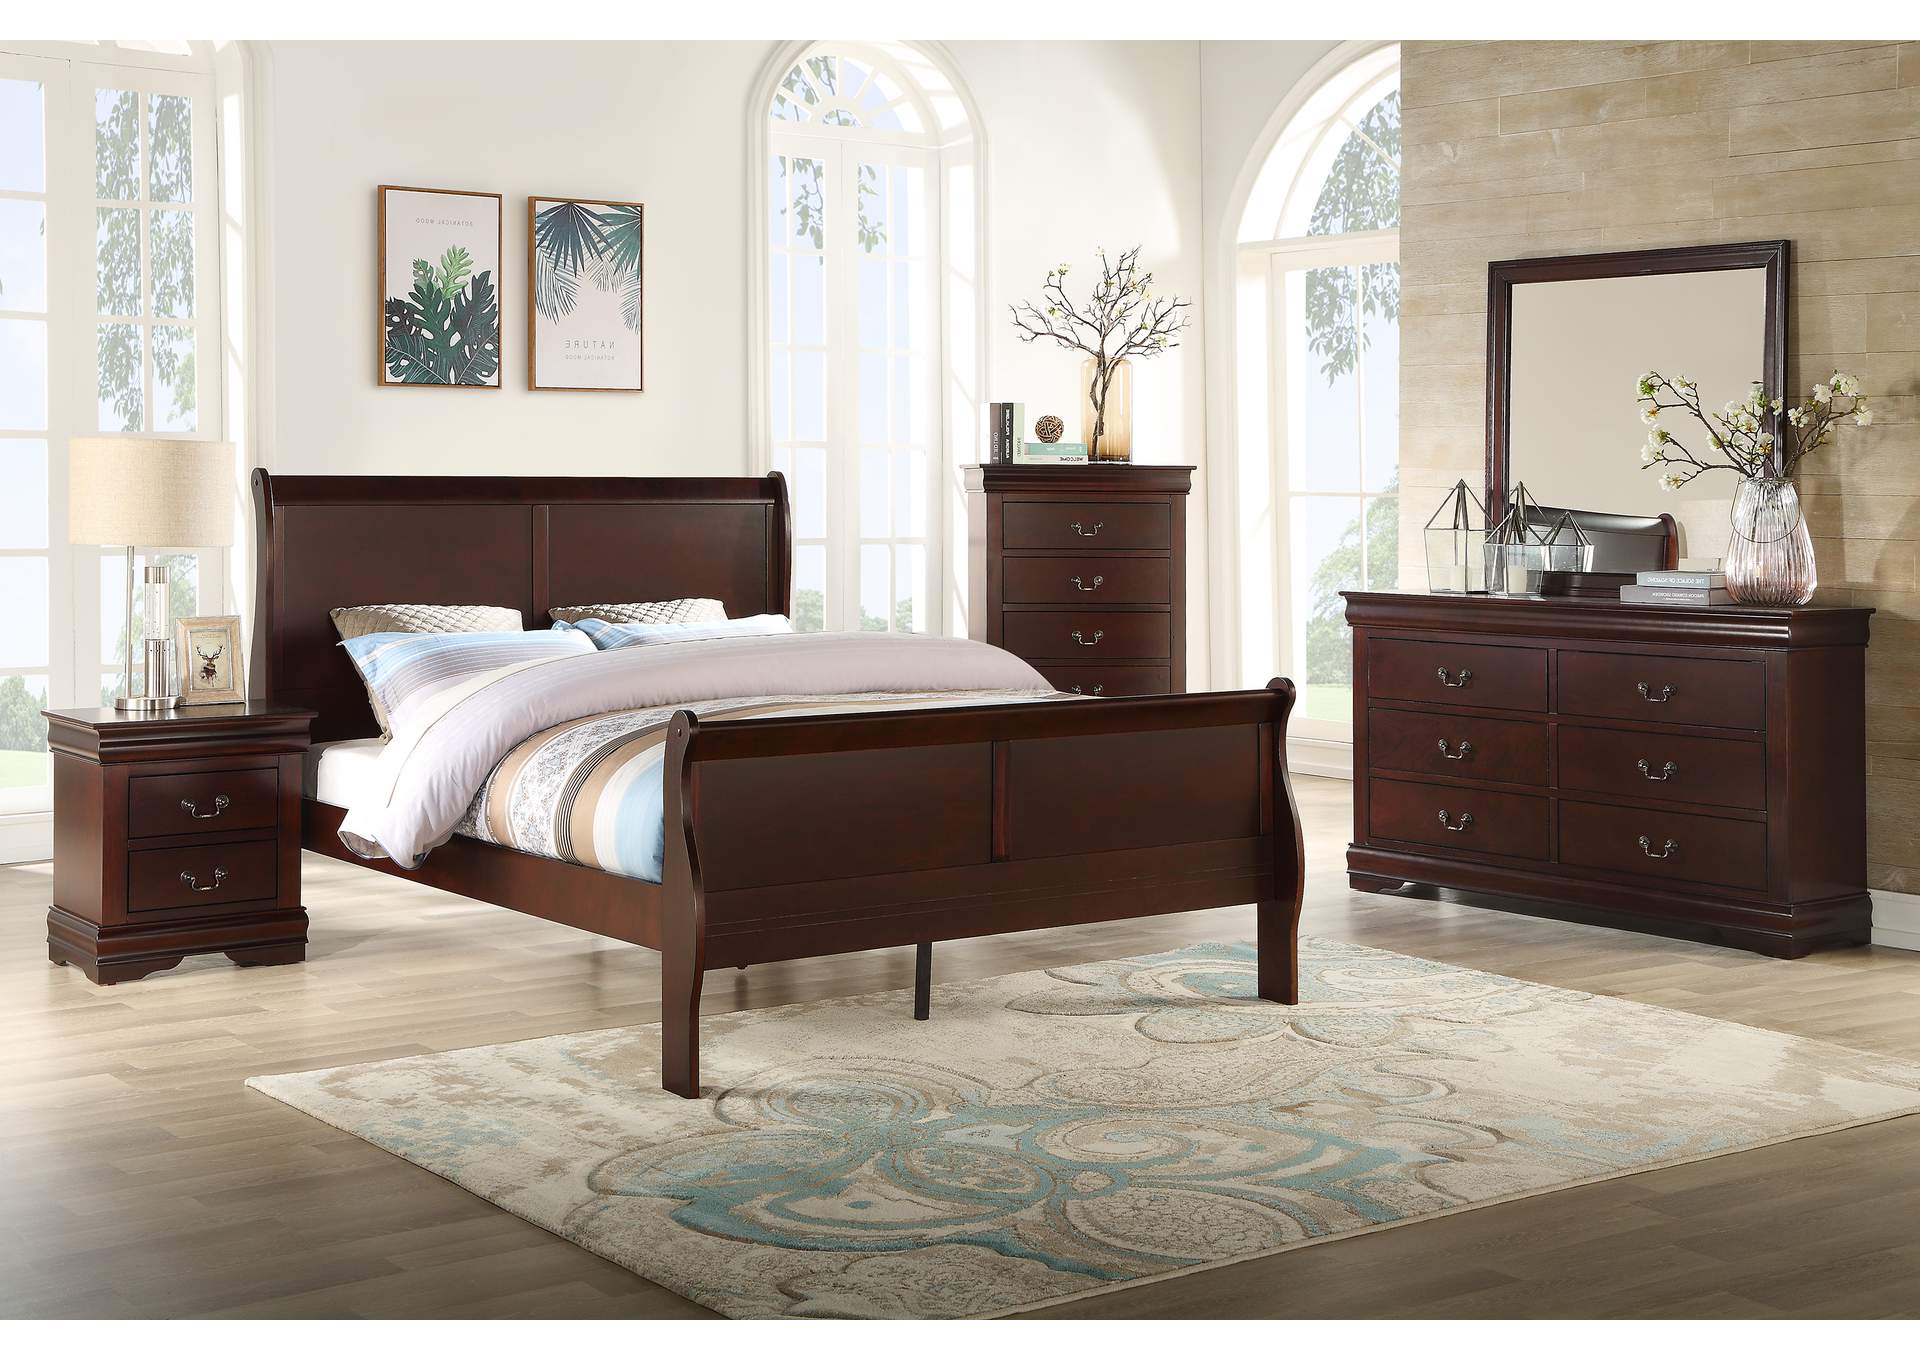 Louis Philip Cherry Full Bed W/ Dresser, Mirror, Nightstand,Crown Mark